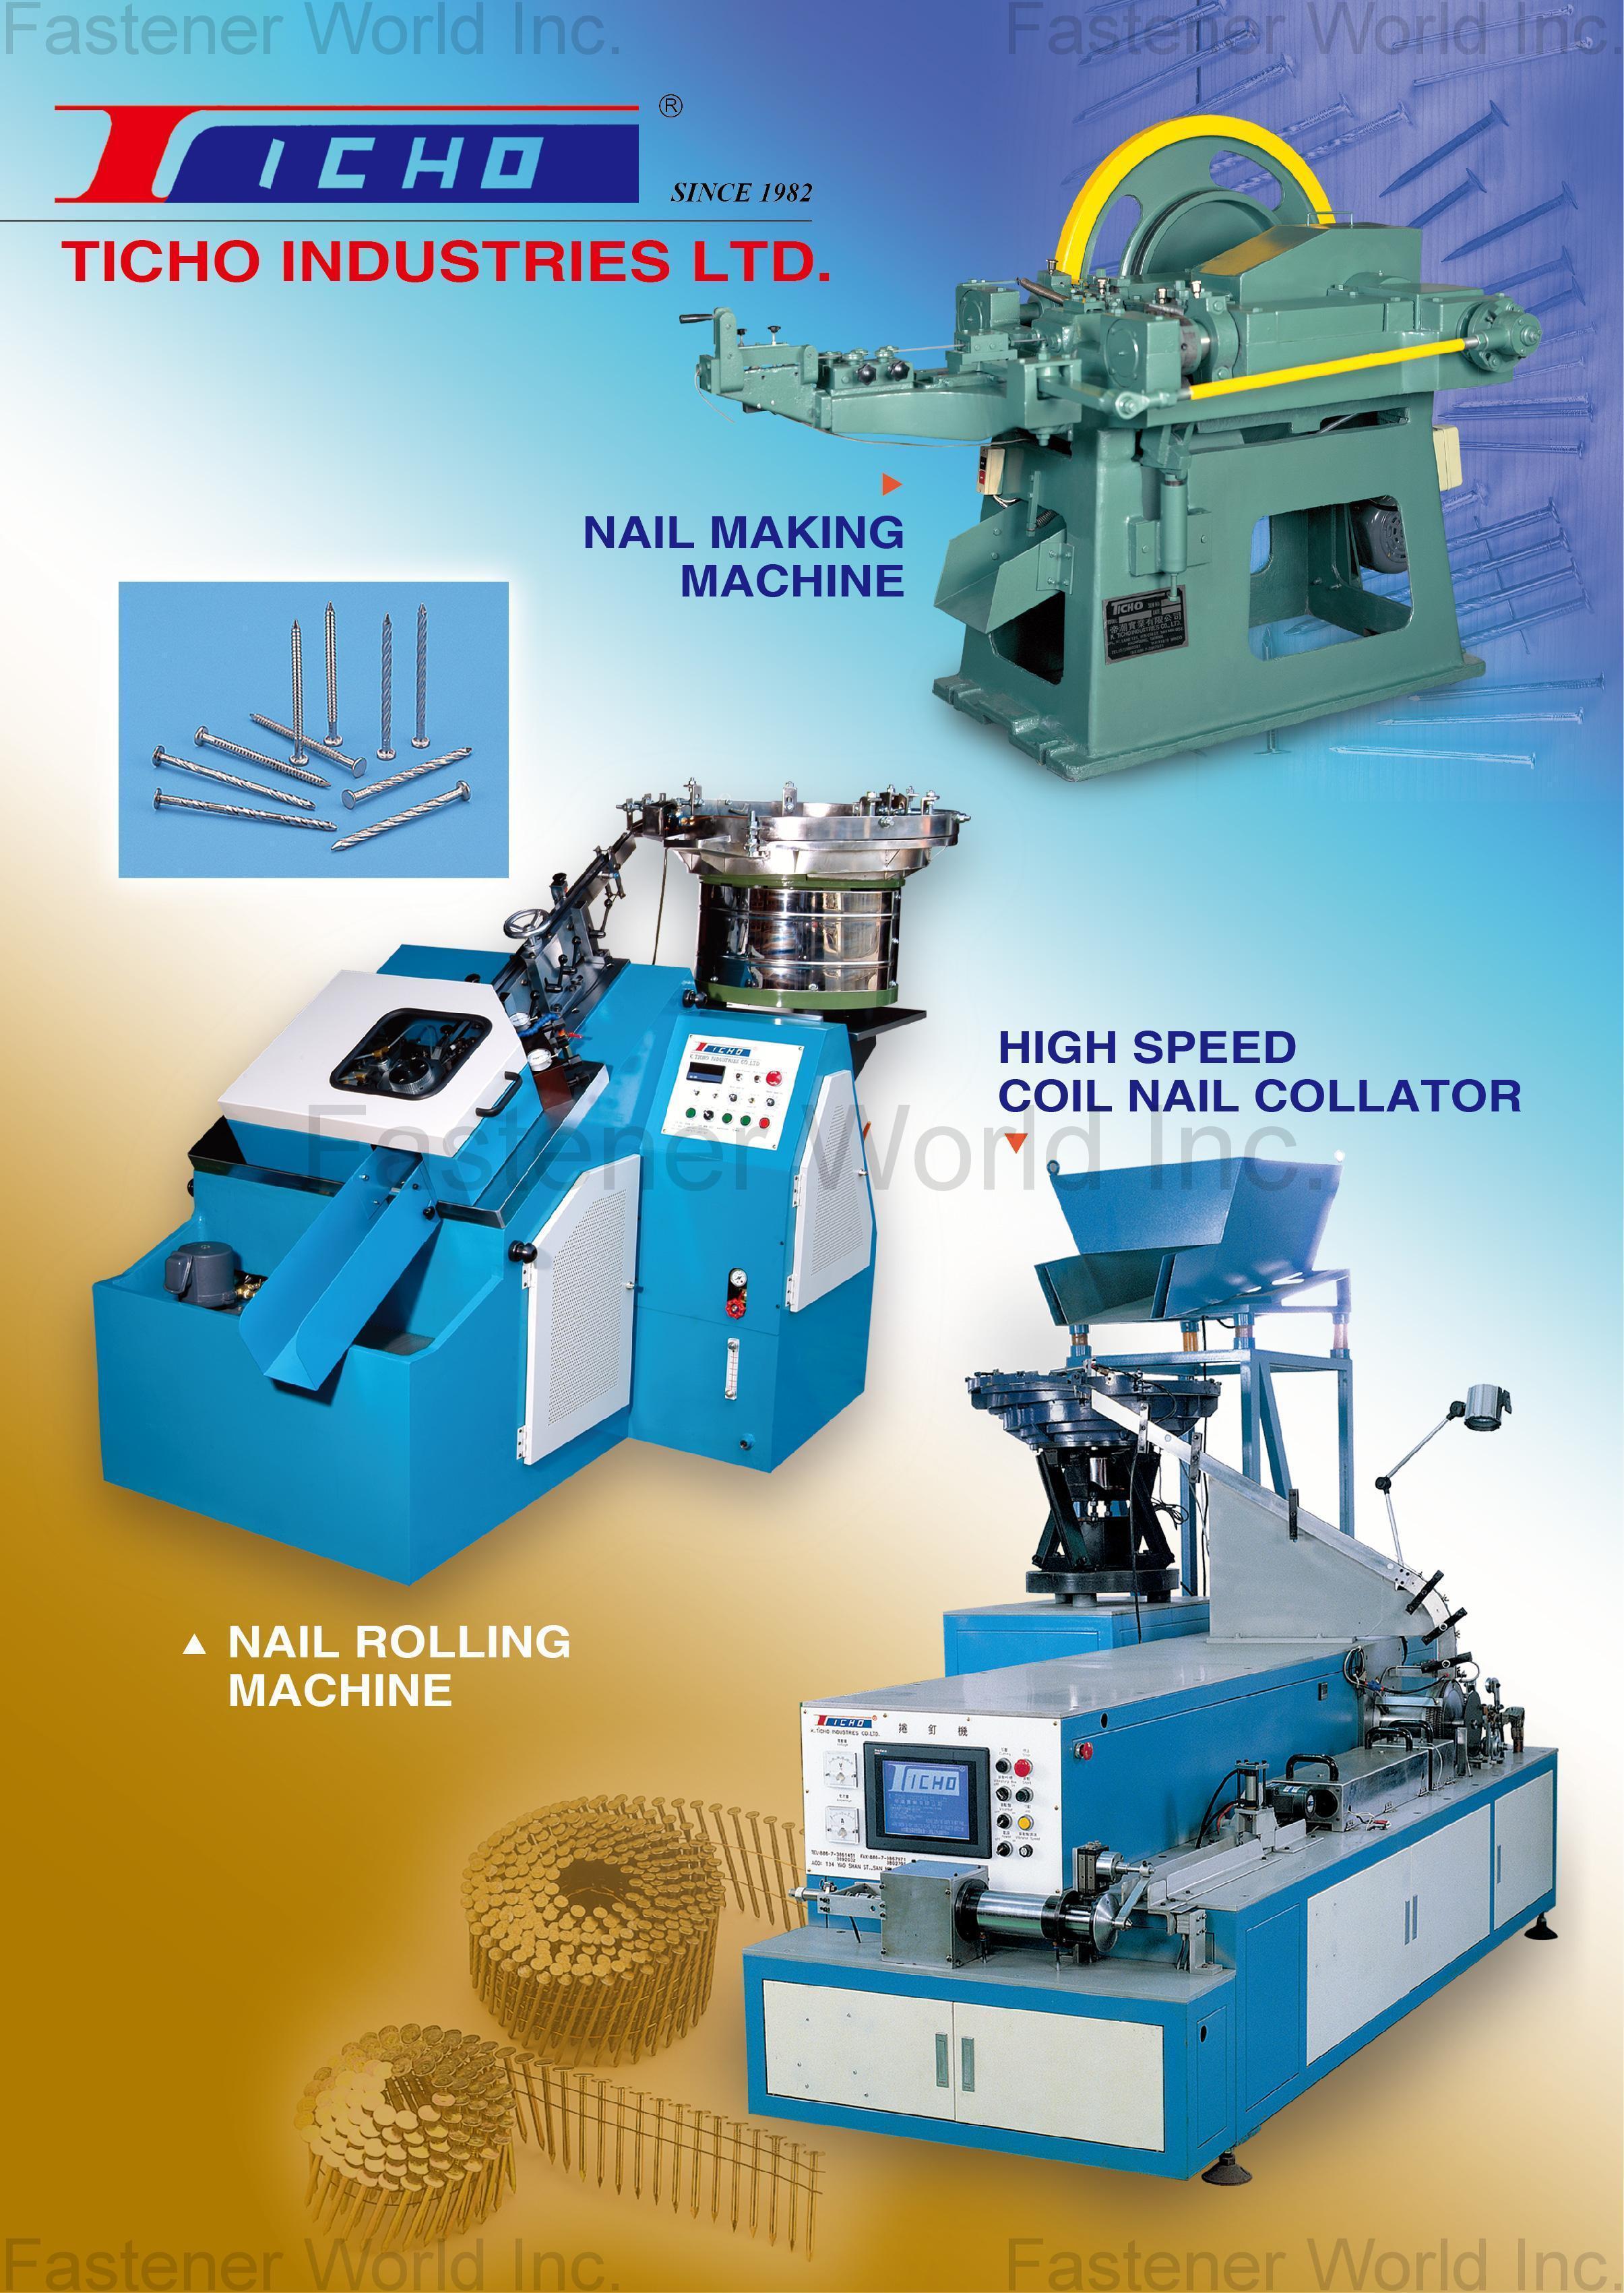 Nail Manufacturing Machinery Nail, Making Machine, High Speed Coil Nail Collator, Nail Rolling Machine